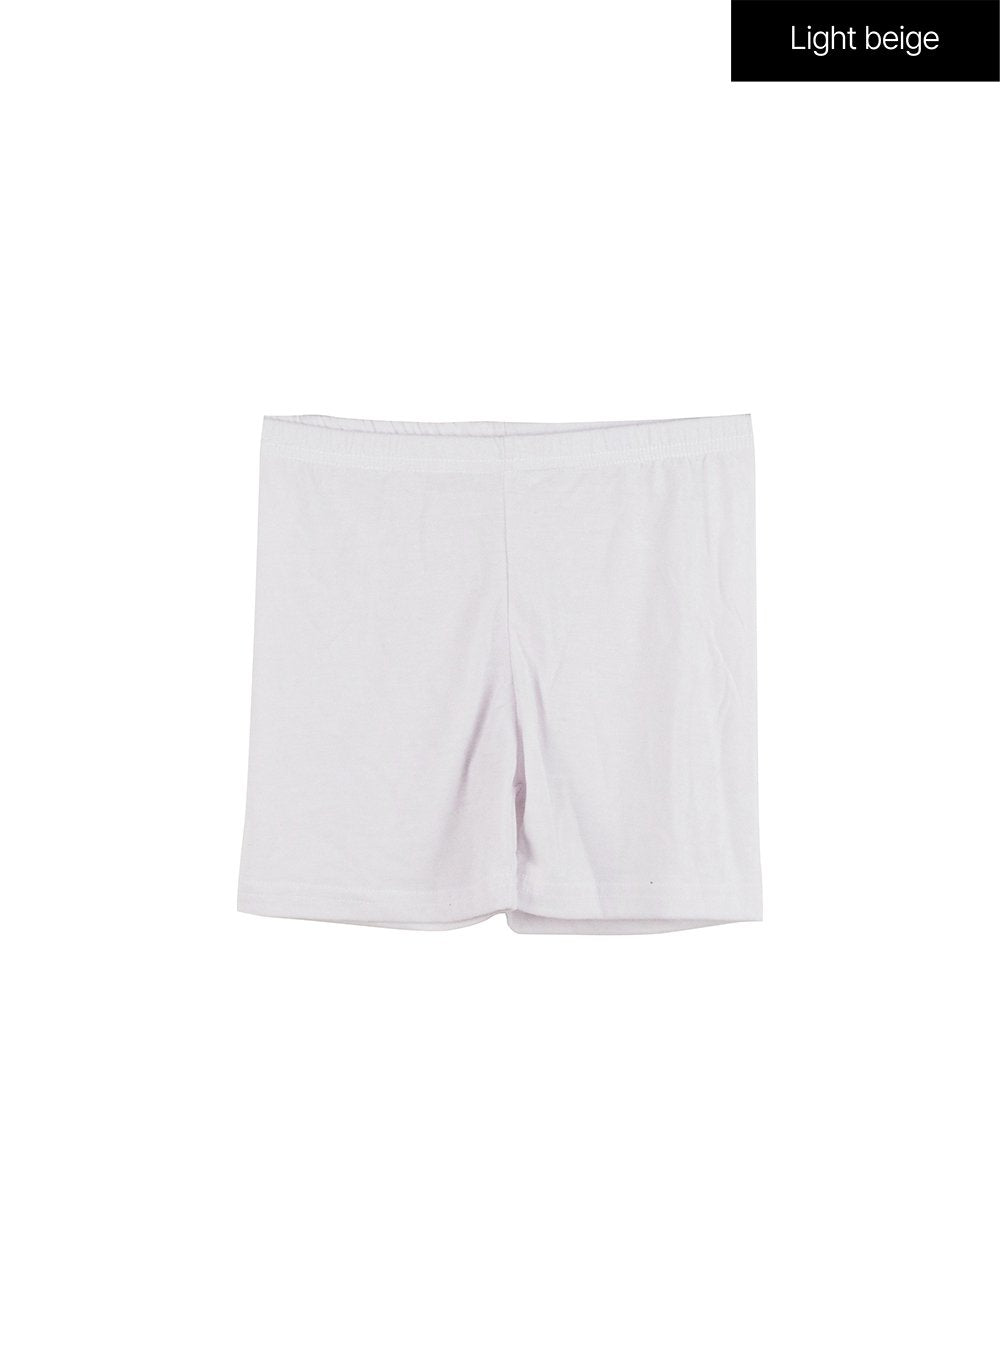 fleece-underpants-on327 / Light beige